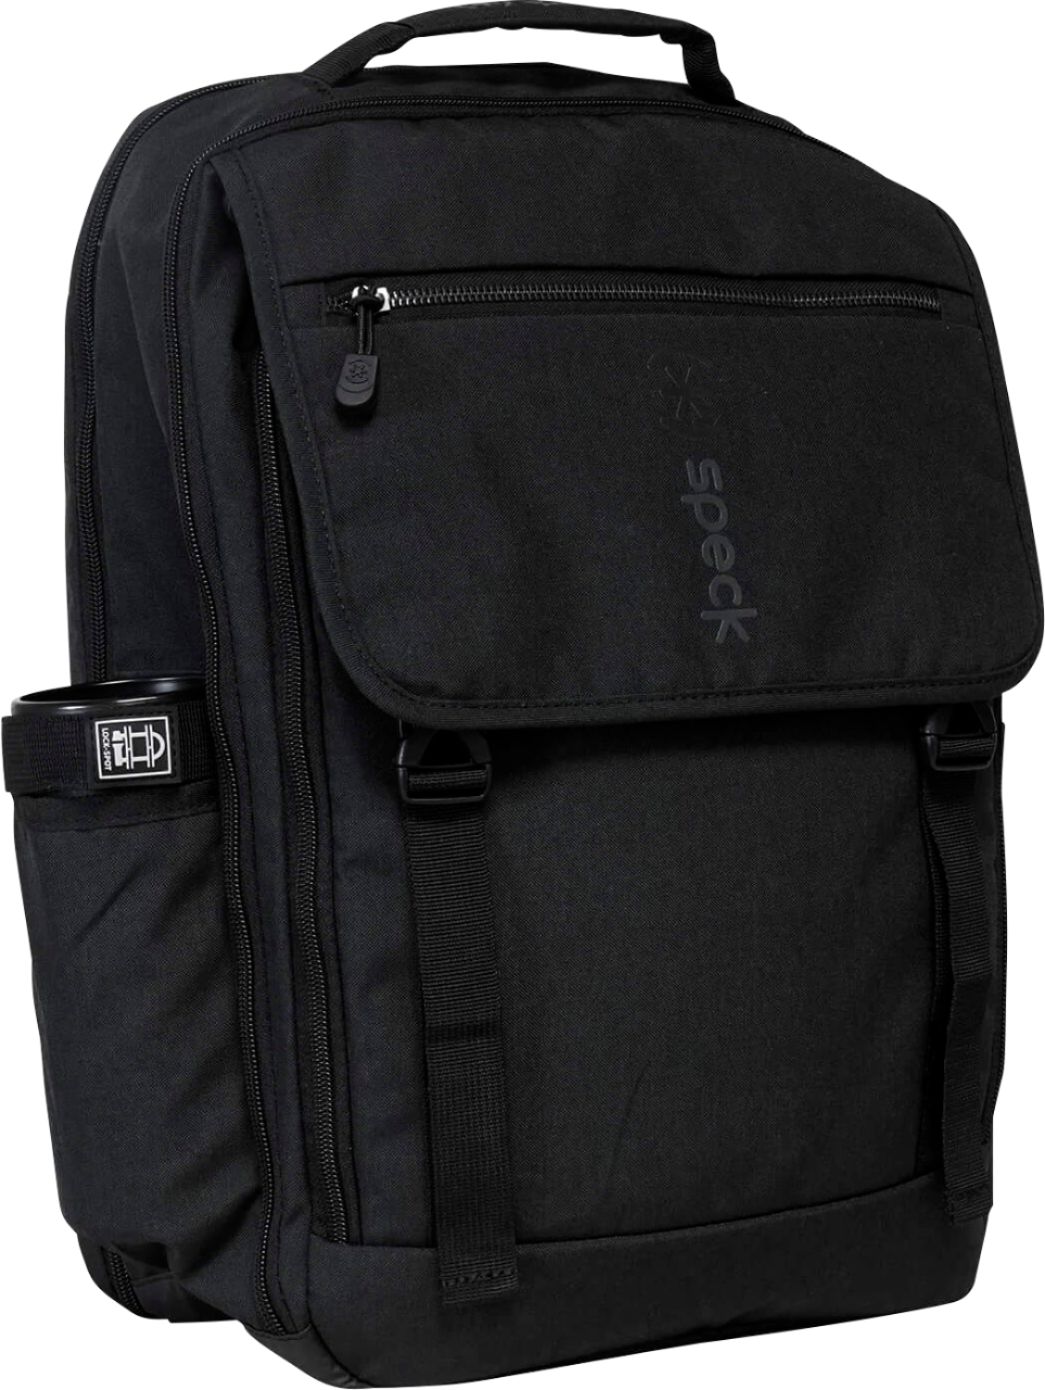 Speck - Rucker Backpack for 15" Laptops - Charcoal